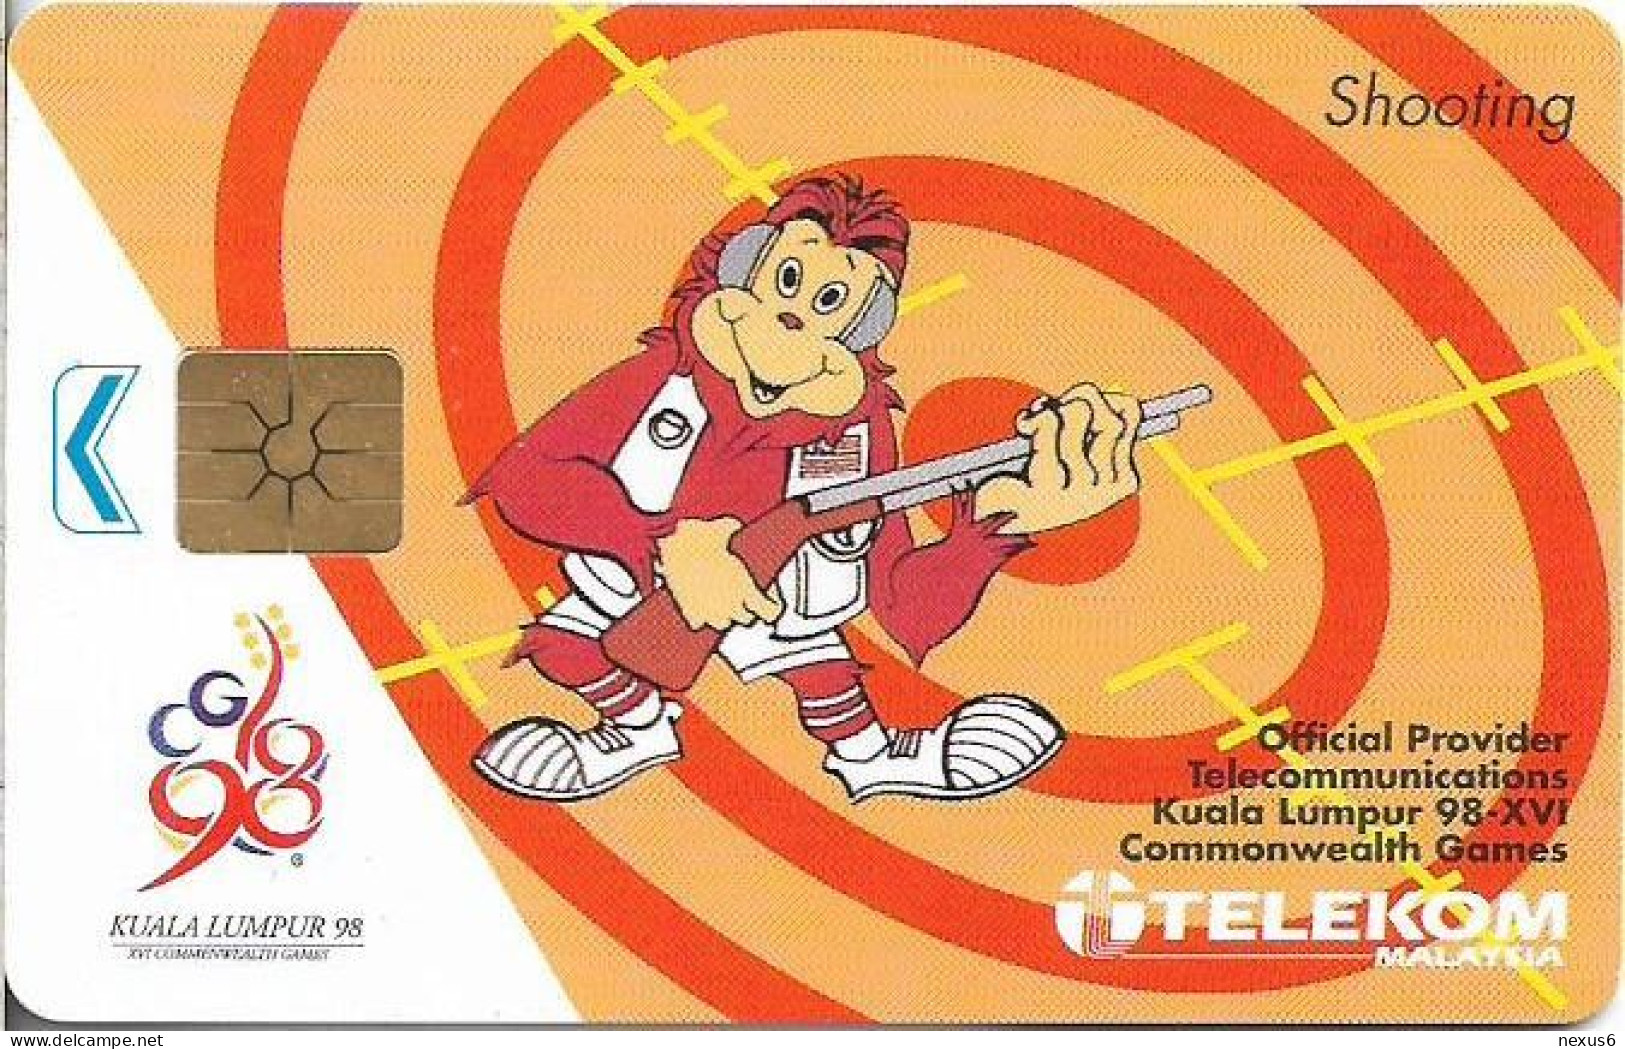 Malaysia - Telekom Malaysia (chip) - Kuala Lumpur '98 - Shooting, Chip Gem1B Not Symm. White/Gold, 1998, 5RM, Used - Malaysia